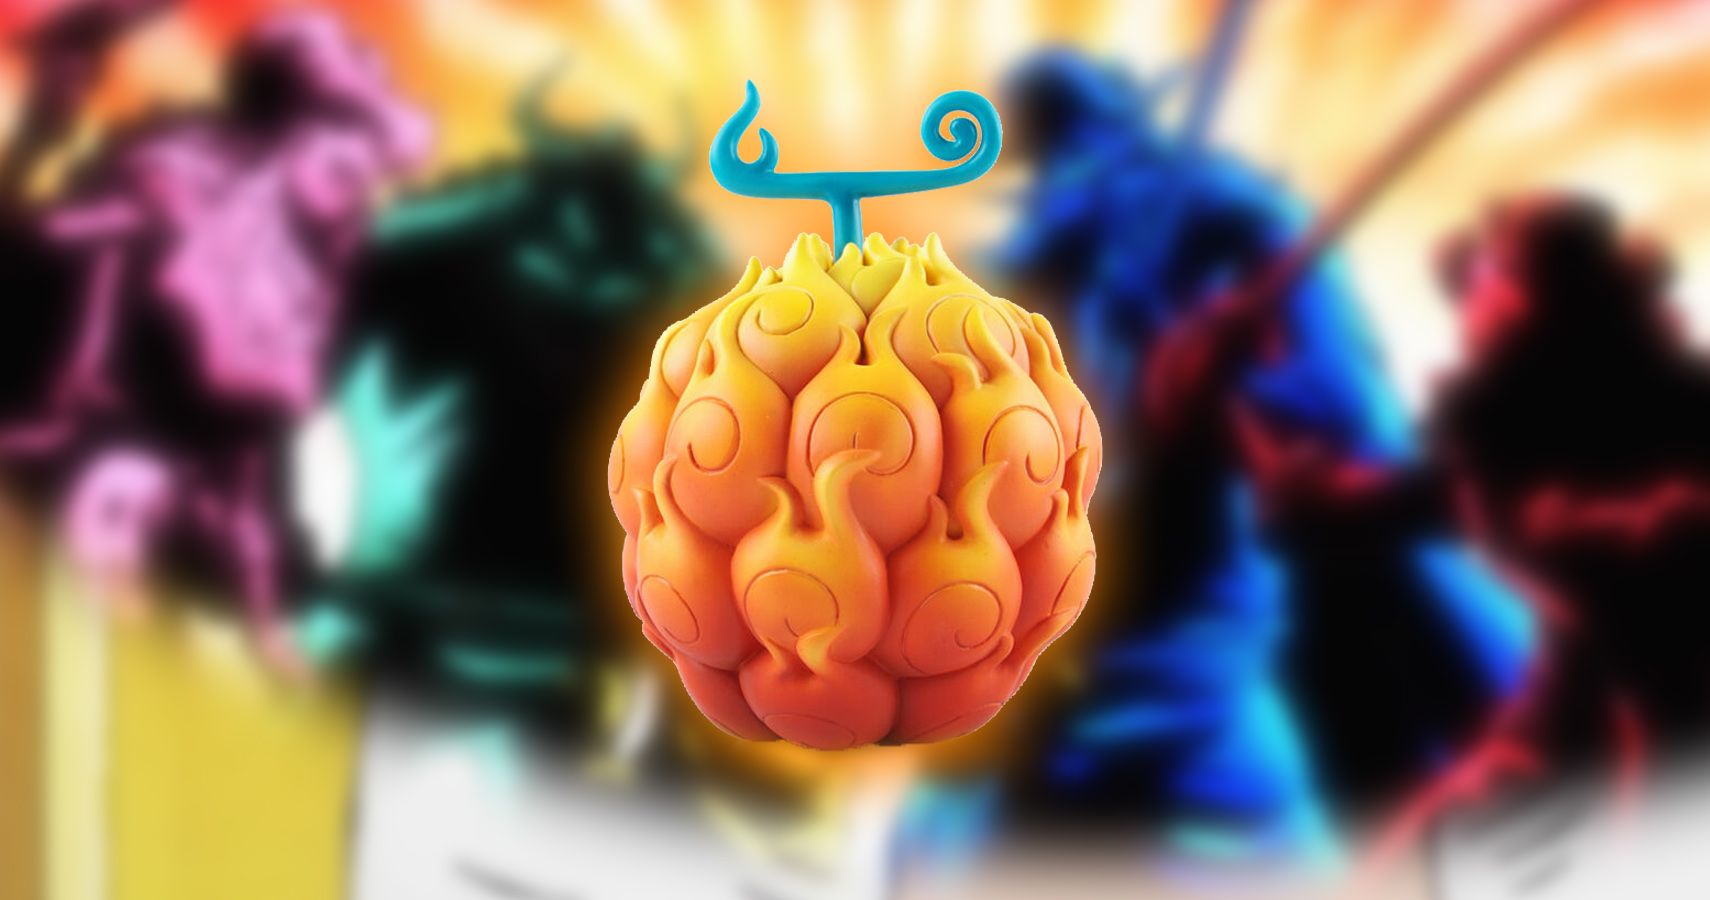 One Piece: Fujitora's Devil Fruit Abilities, Explained